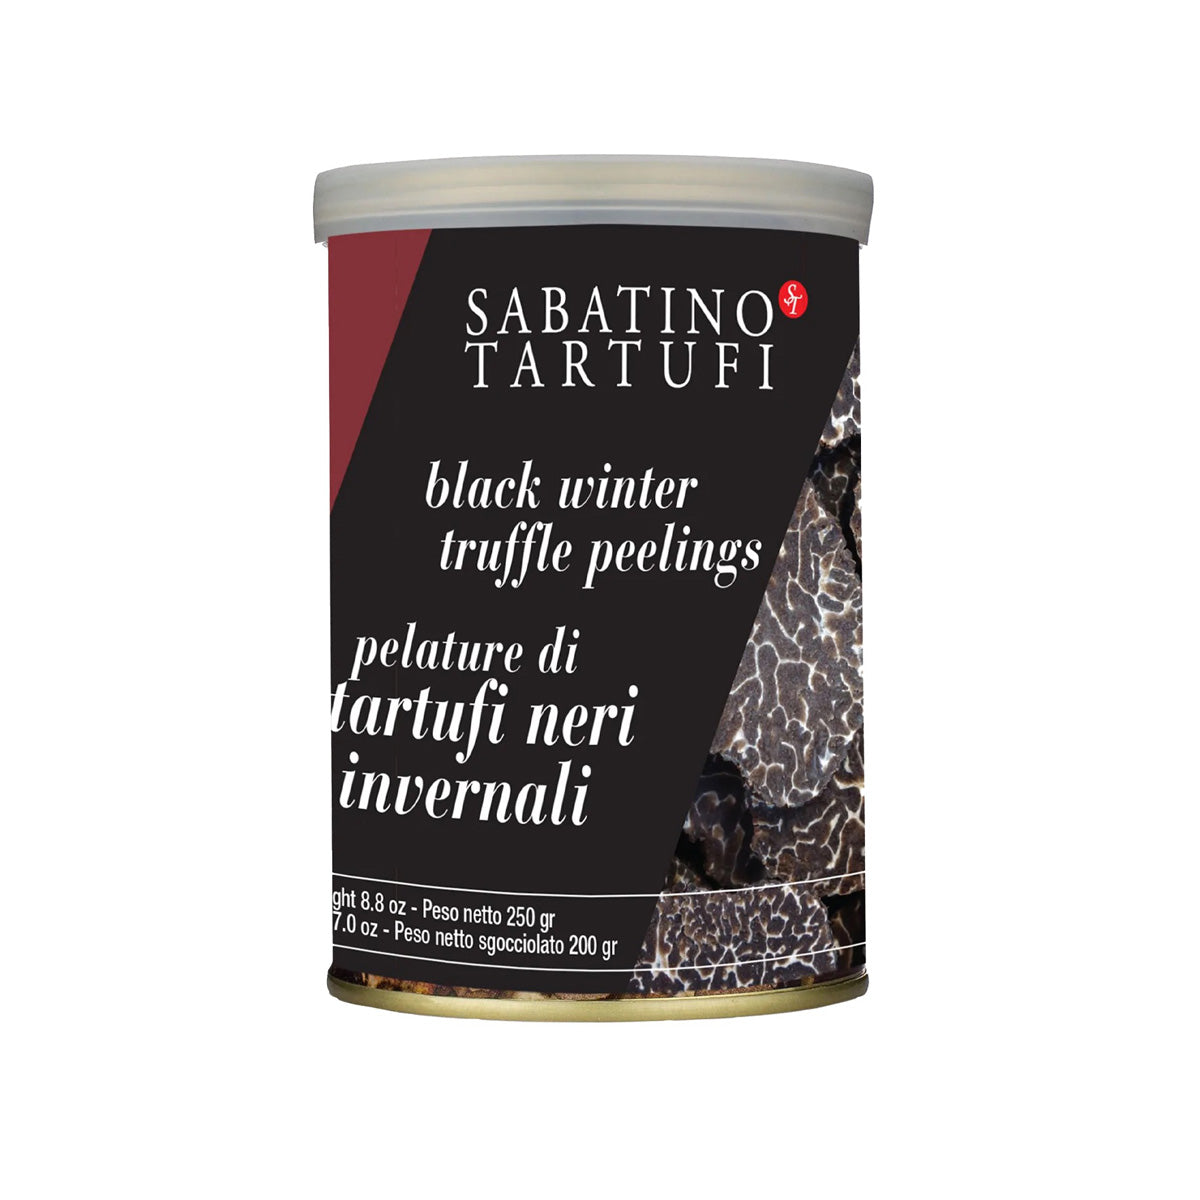 Sabatino Tartufi Black Winter Truffle Peelings 7 OZ